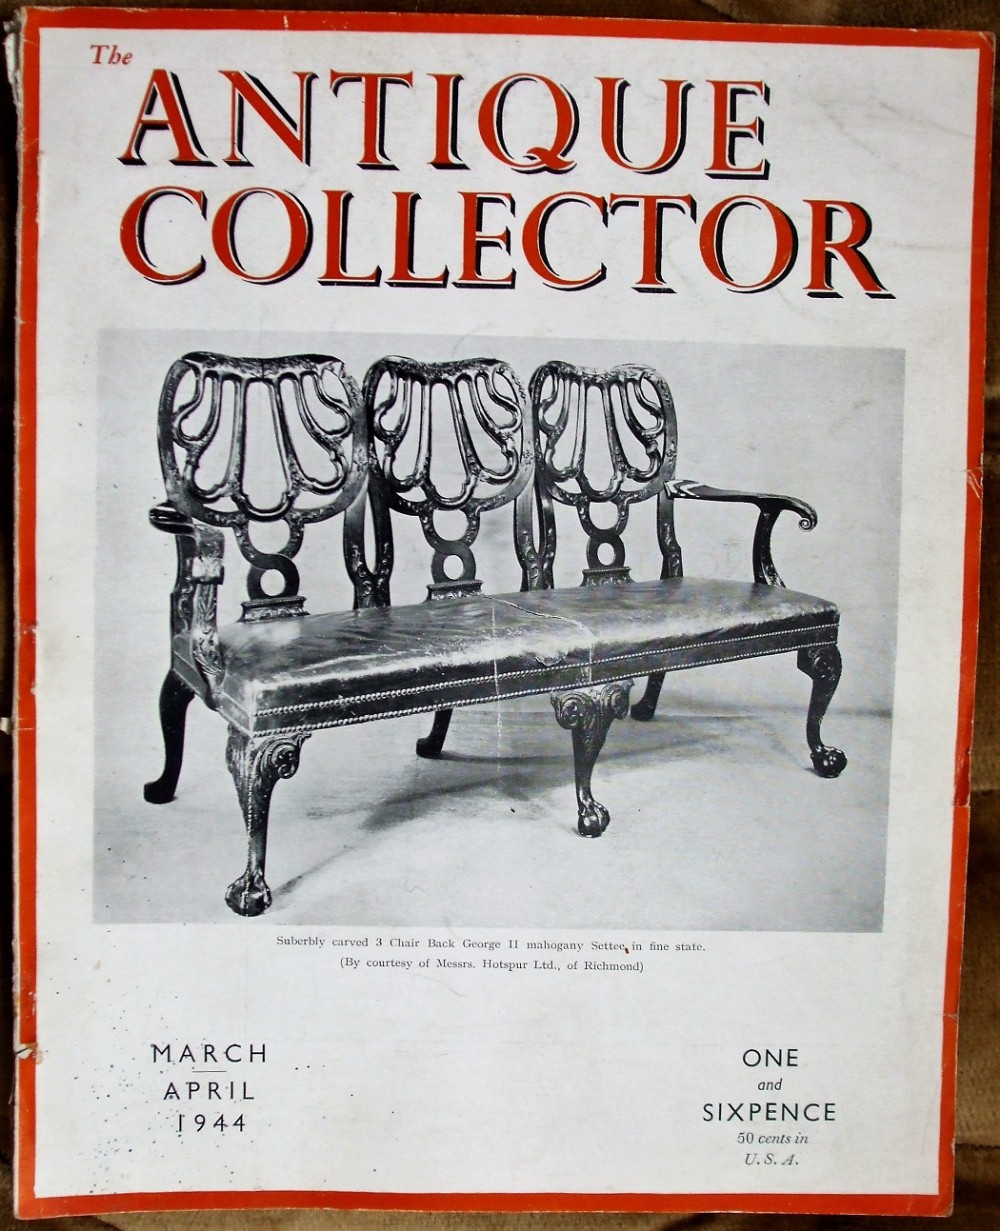 the antique collector vol 15 no 2 march april 1944